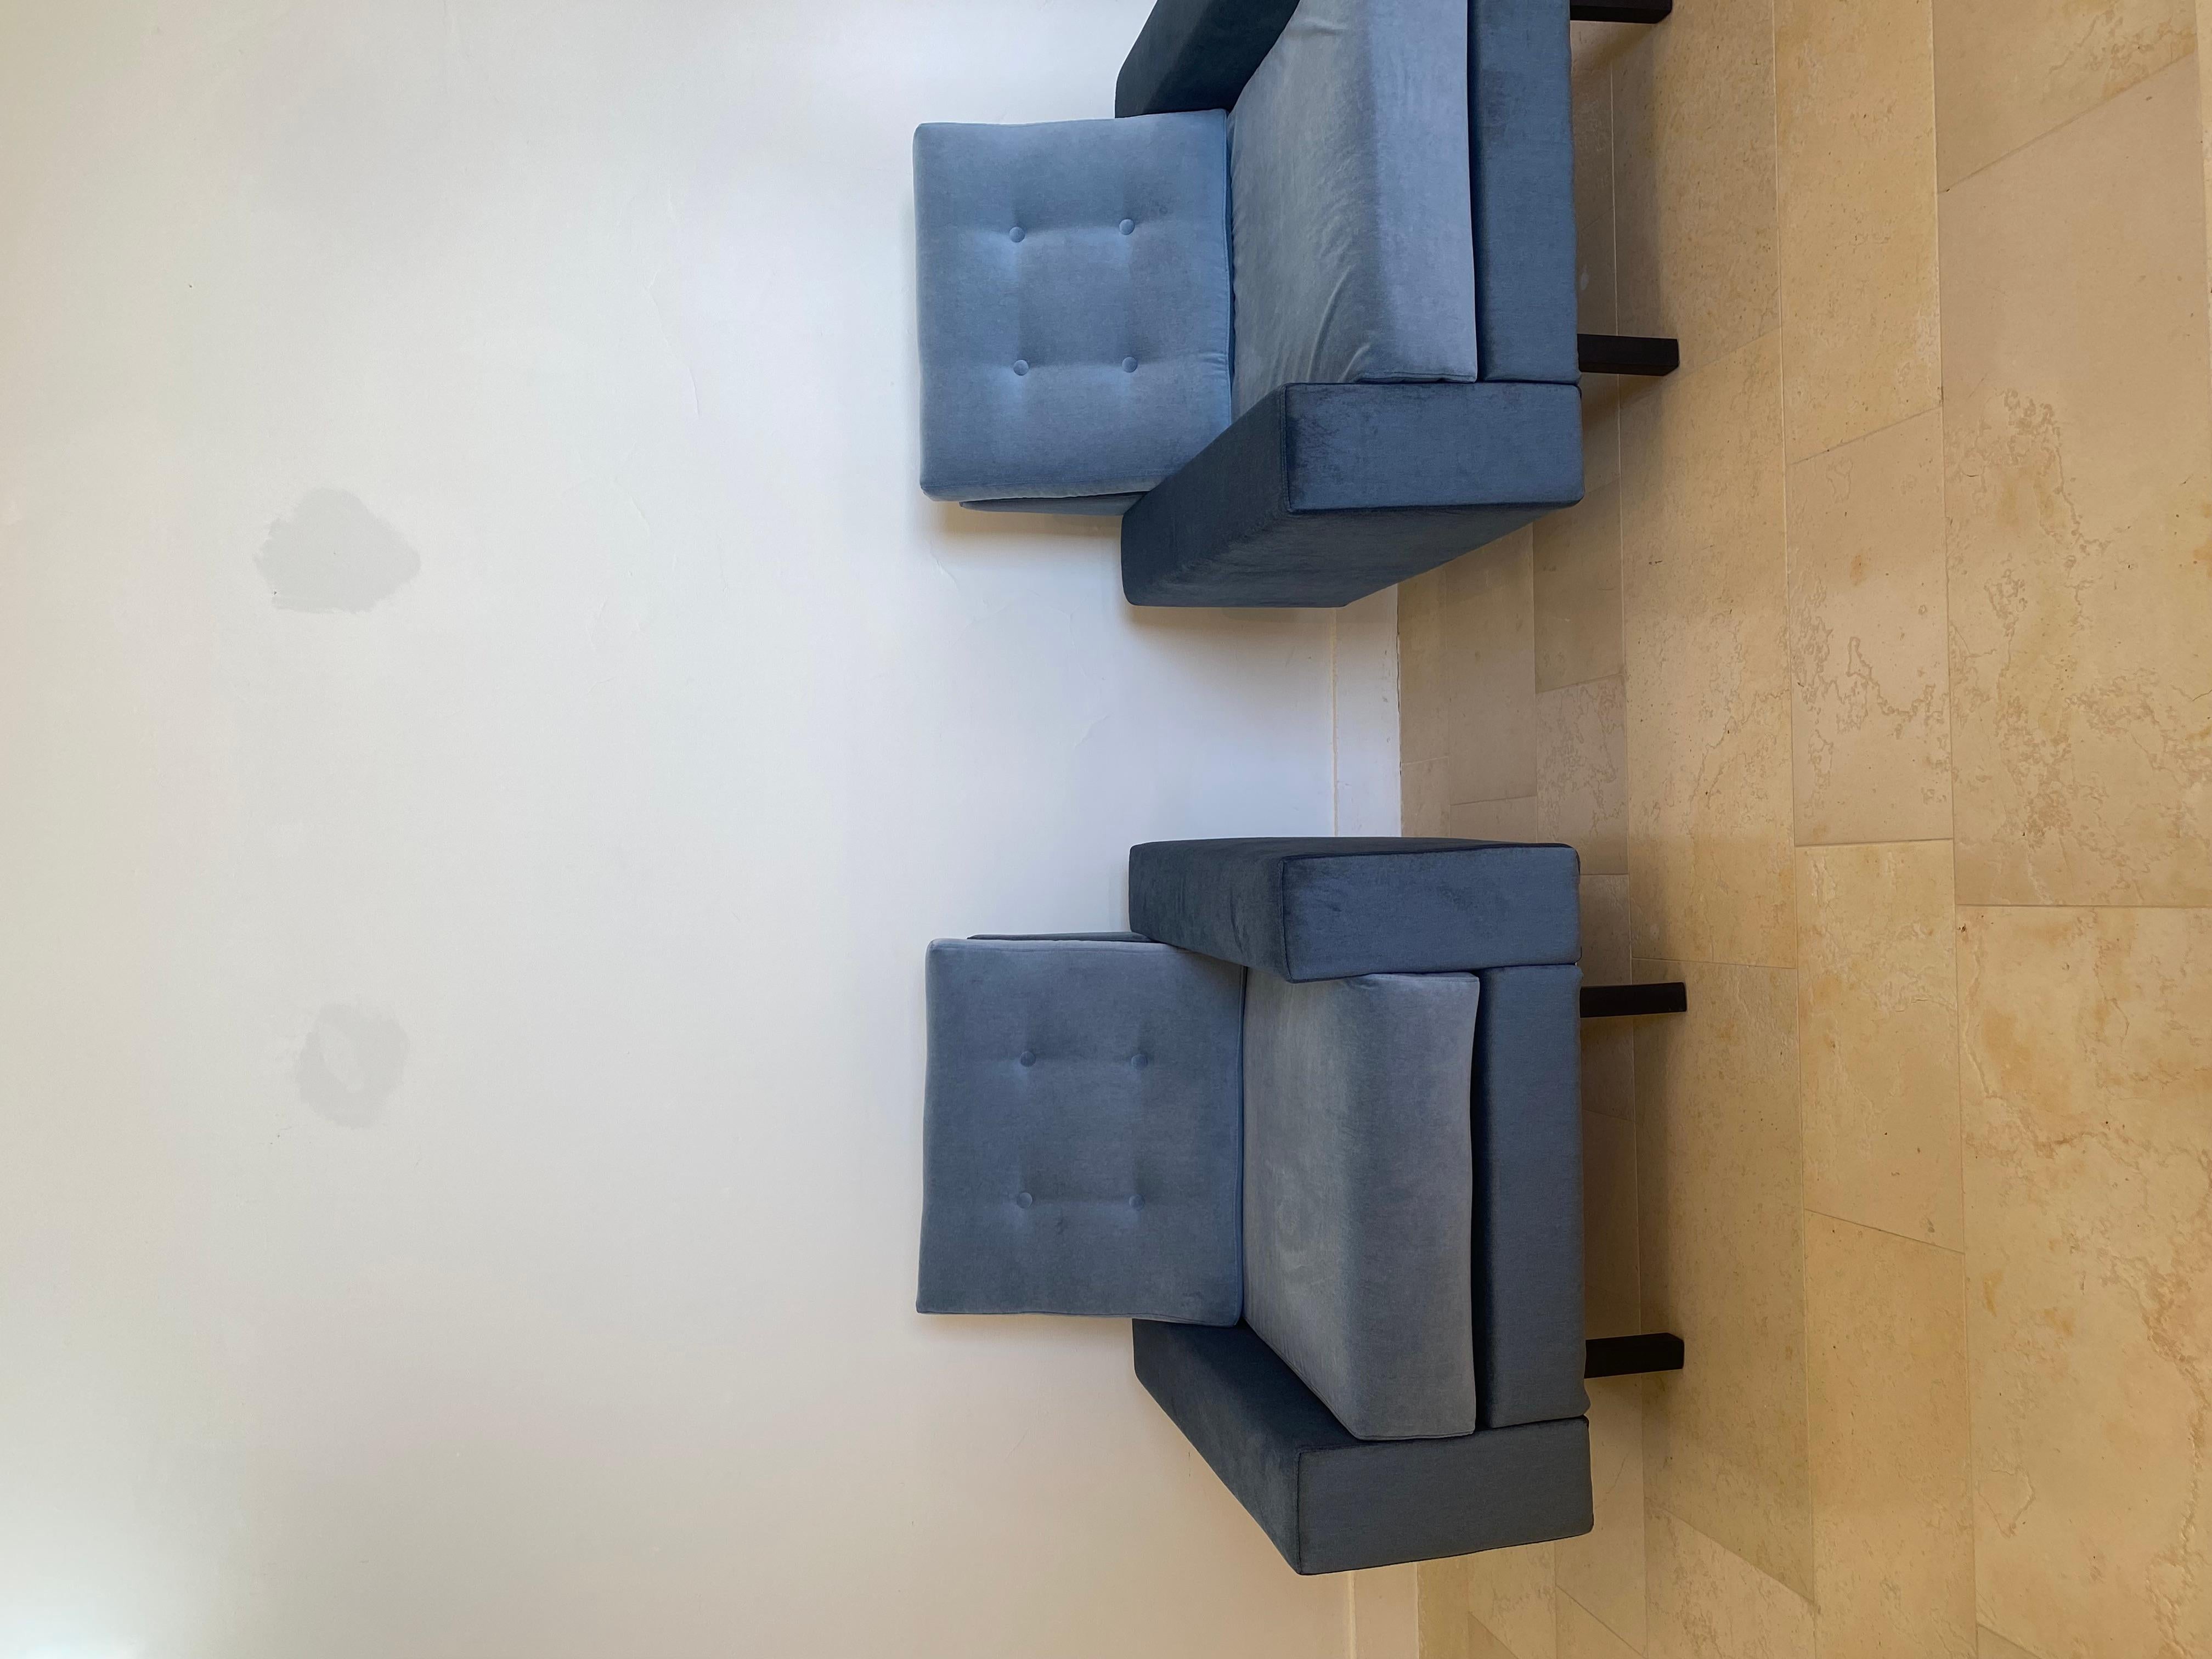 Brazilian Pair of Lounge Chairs by Joaquim Tenreiro, Brazil, Mid Century Modern design For Sale